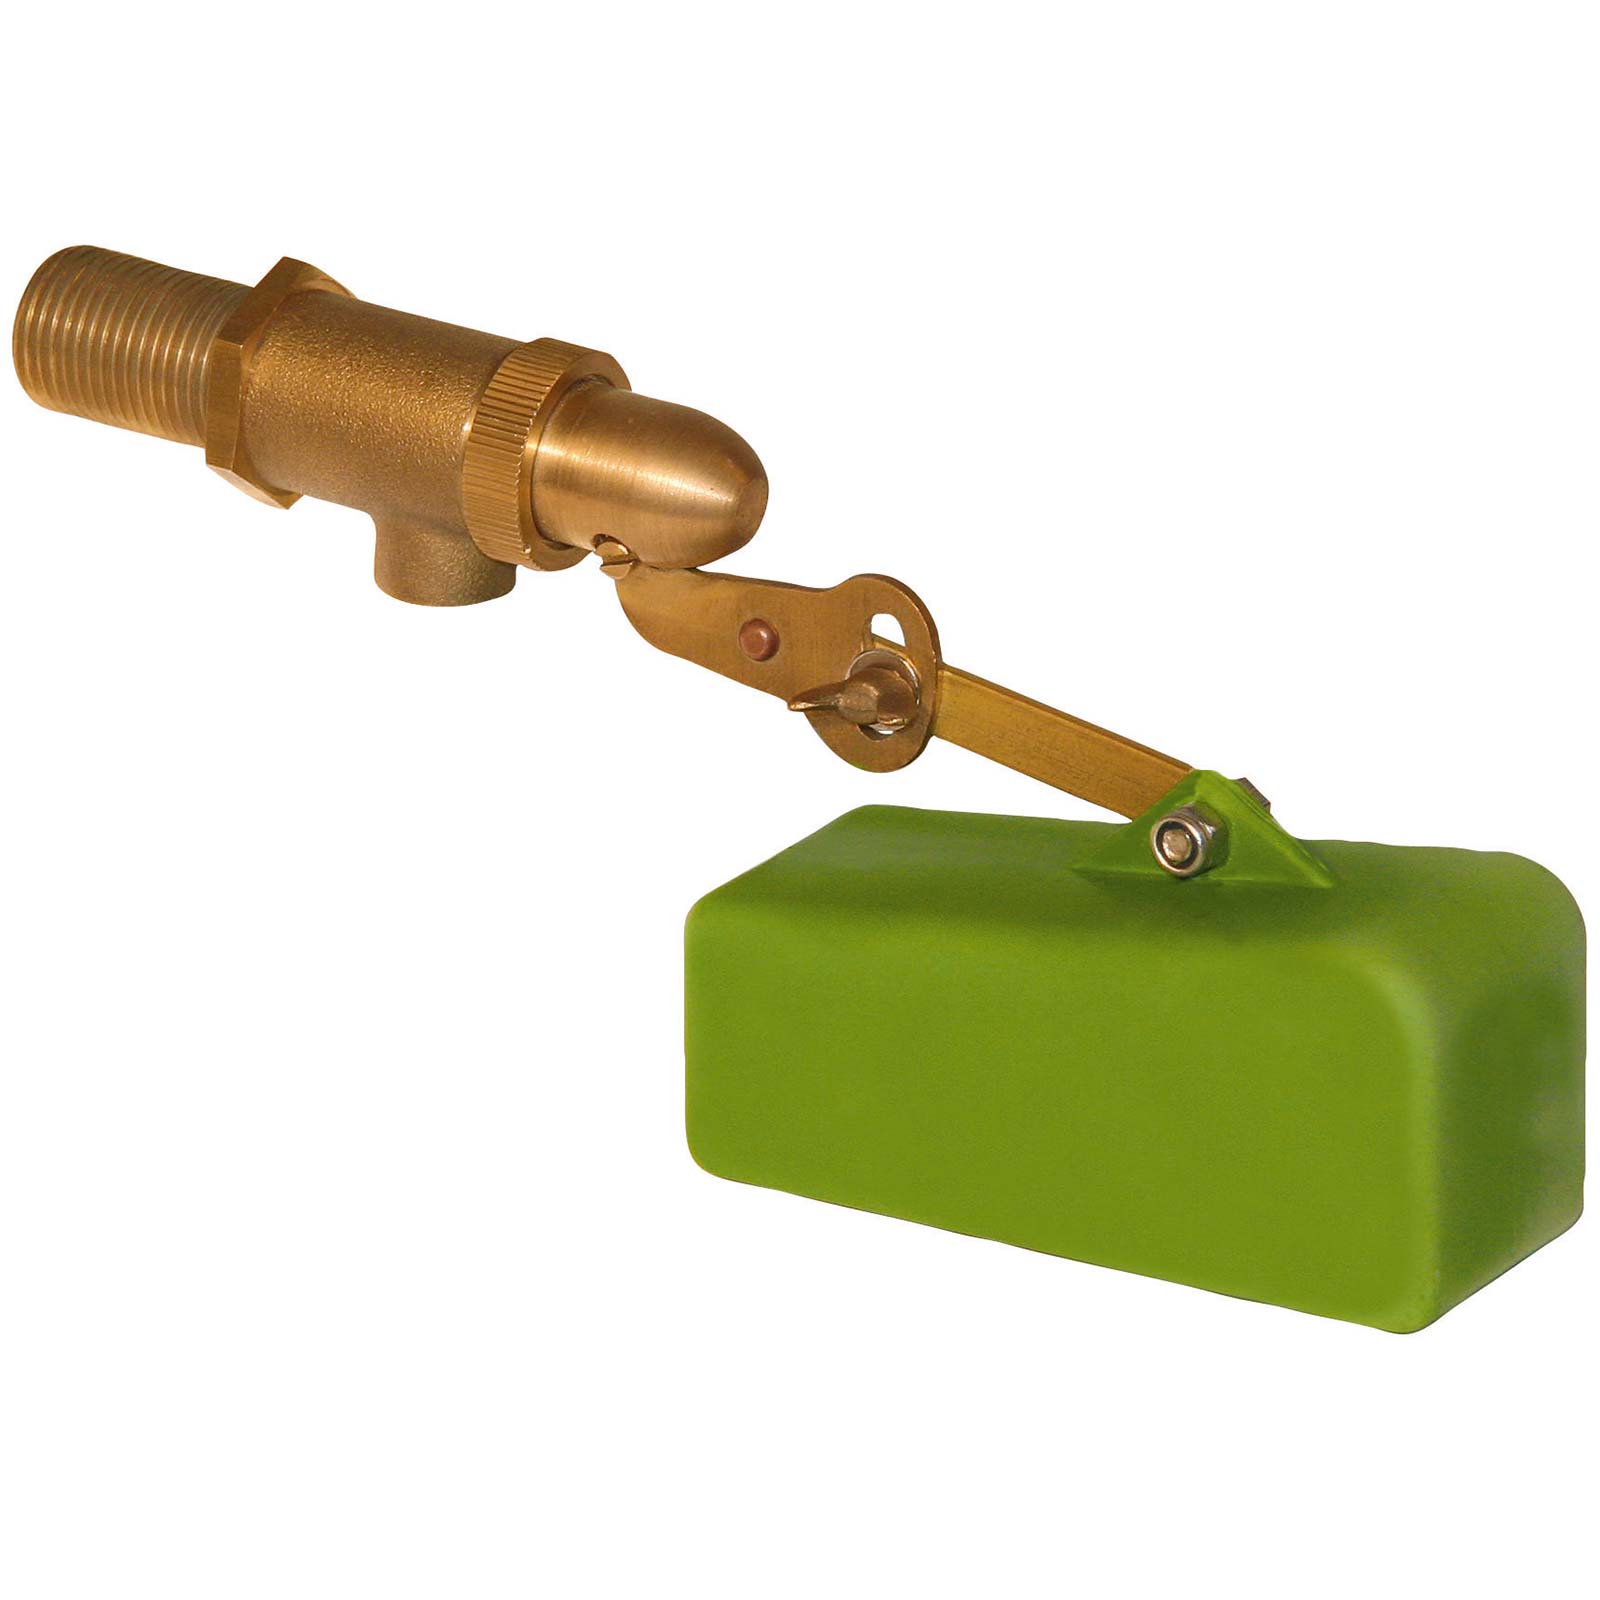 Replacement low pressure float valve